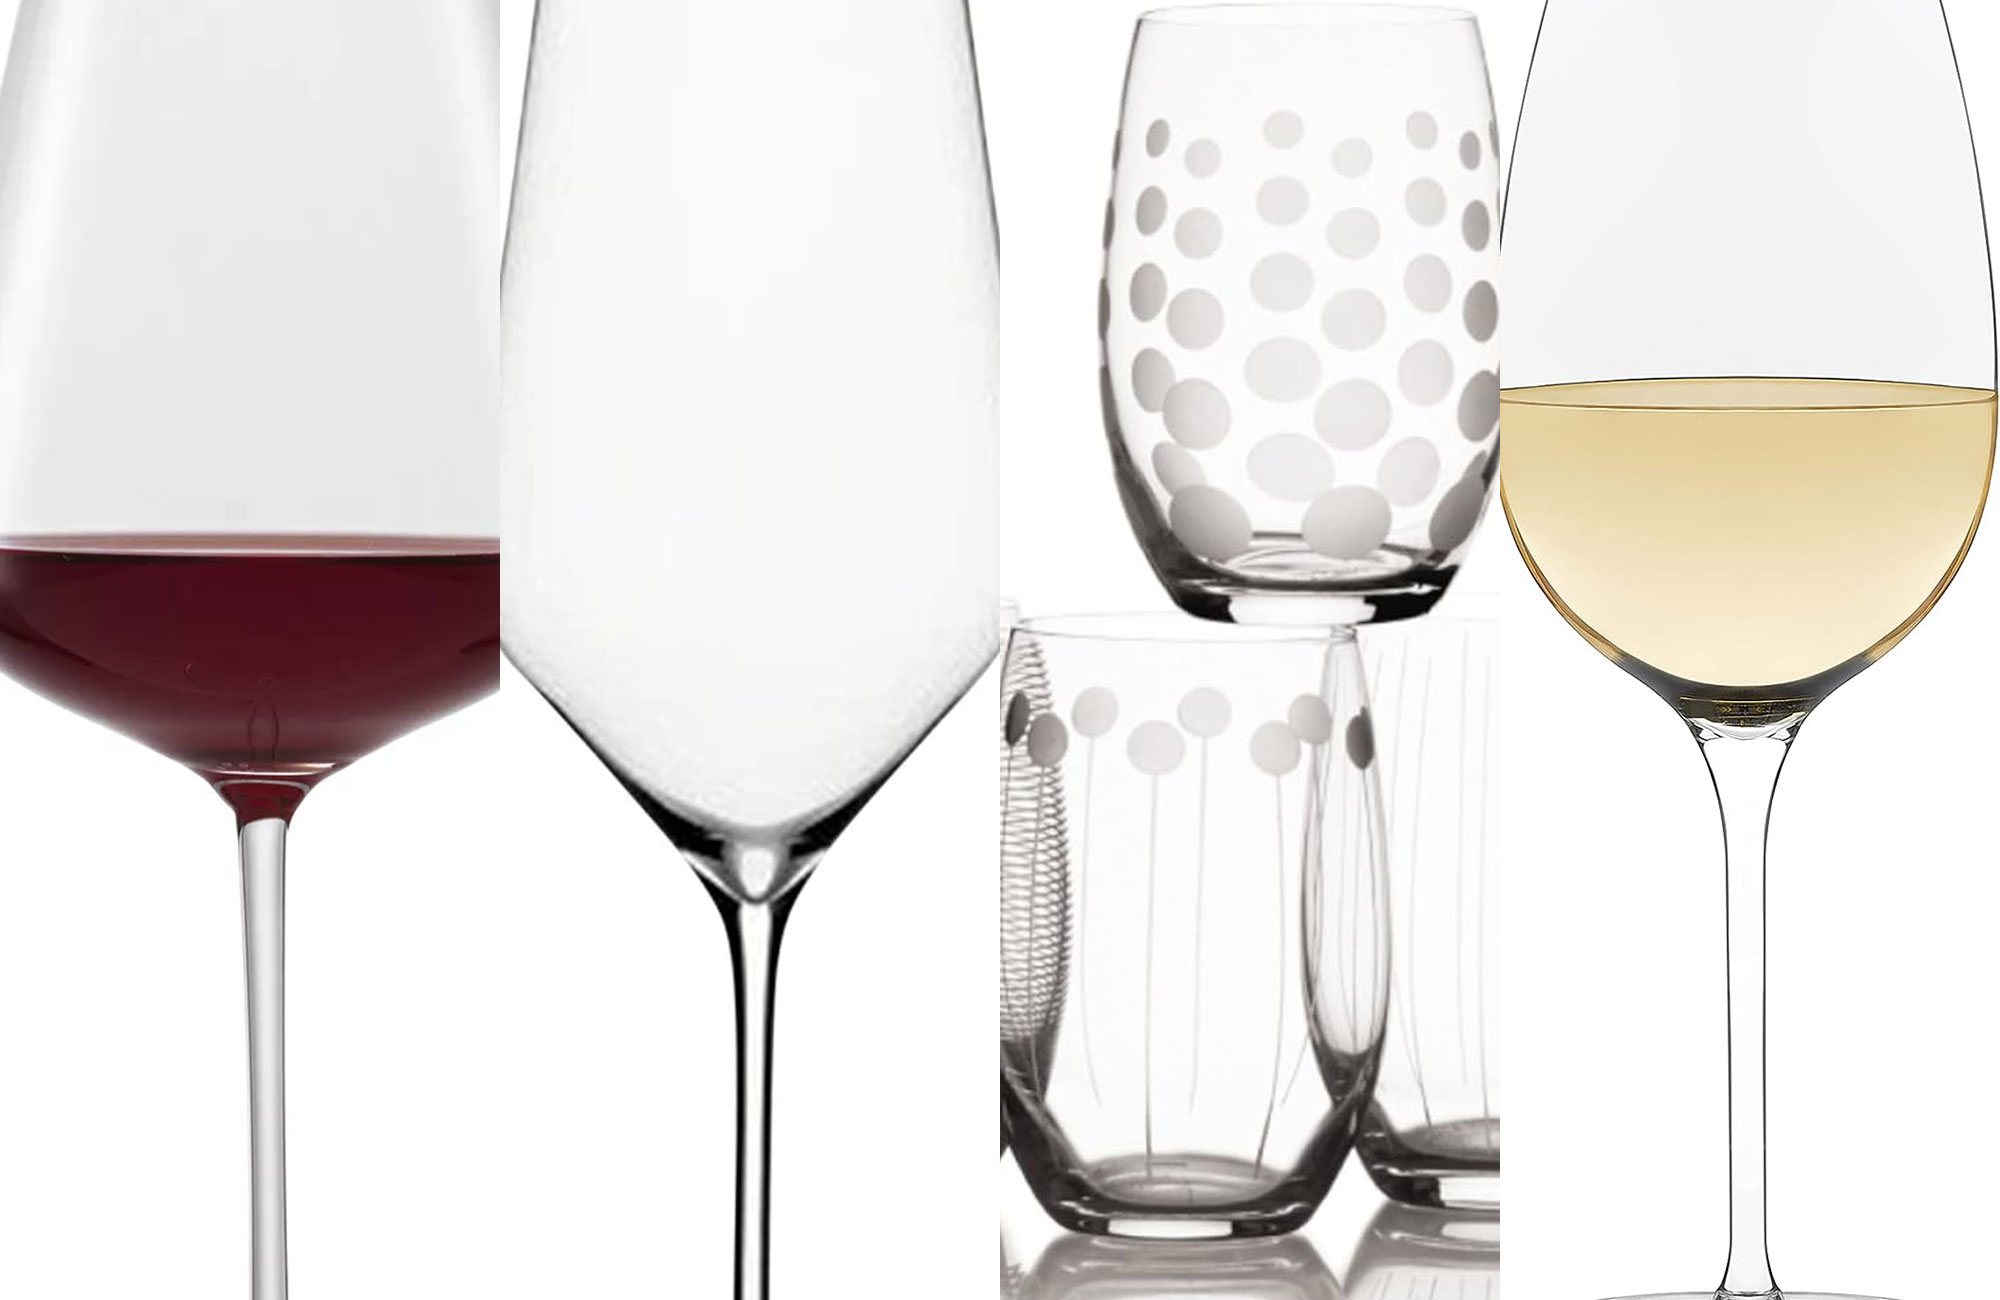 https://www.popsci.com/uploads/2021/04/22/best-wine-glasses-header.jpg?auto=webp&width=1440&height=936